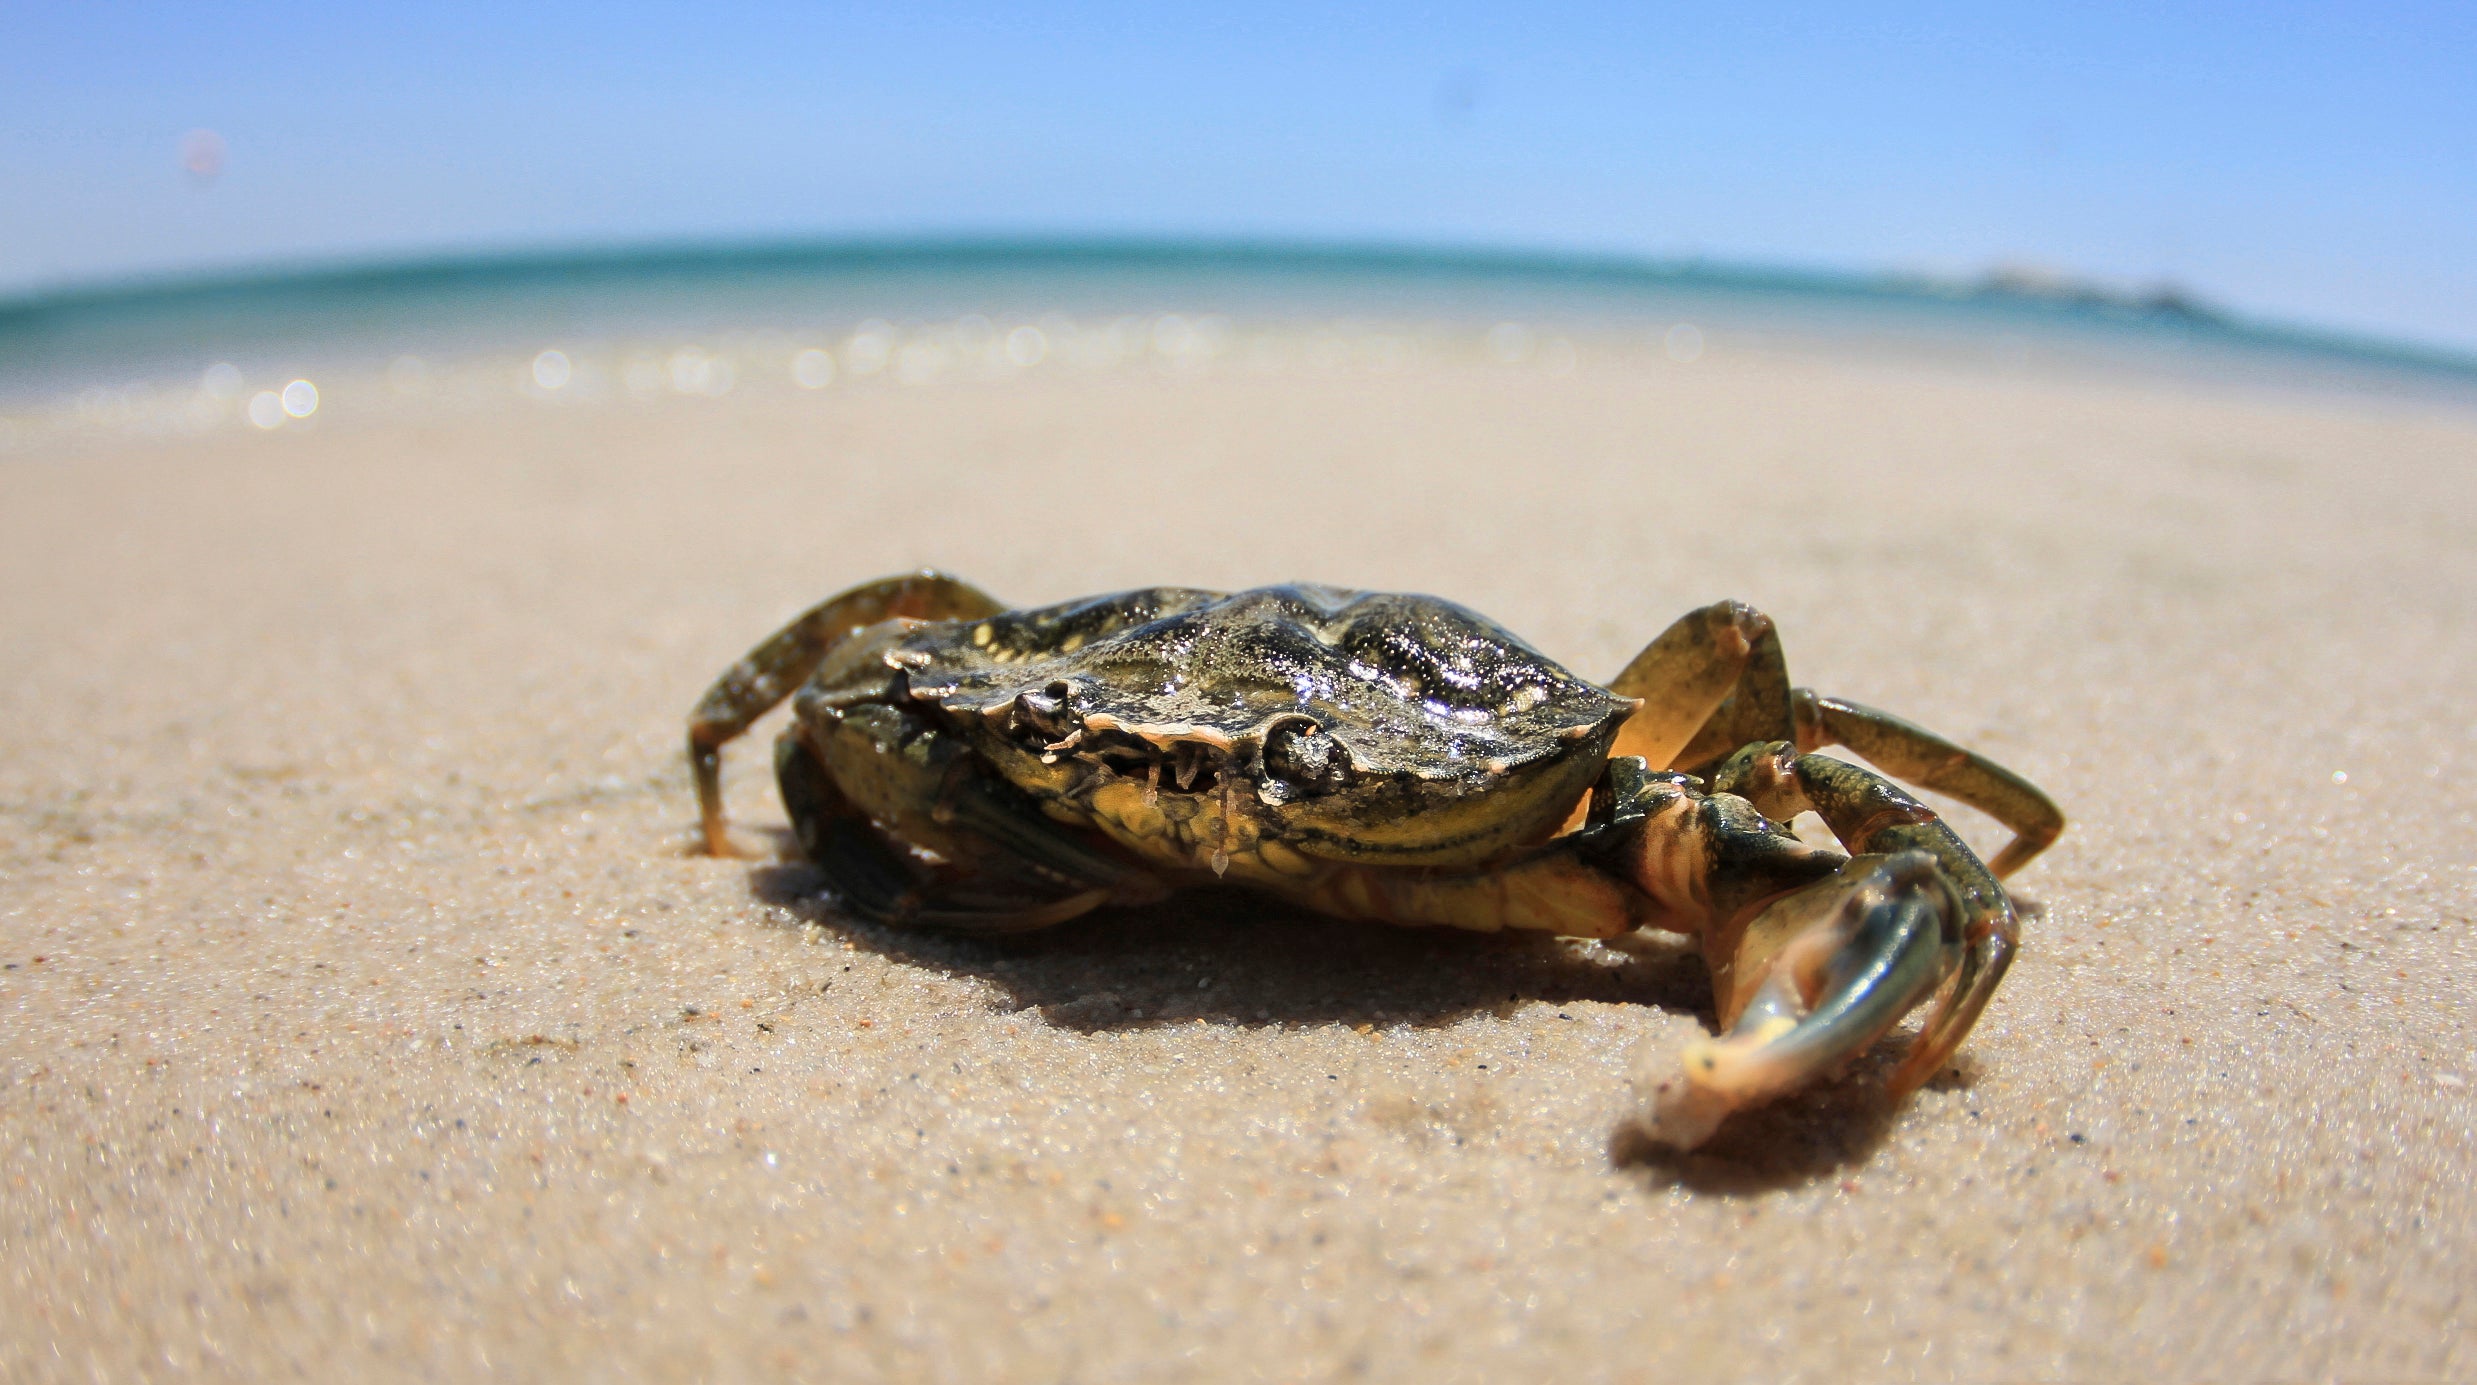 Solitary crab